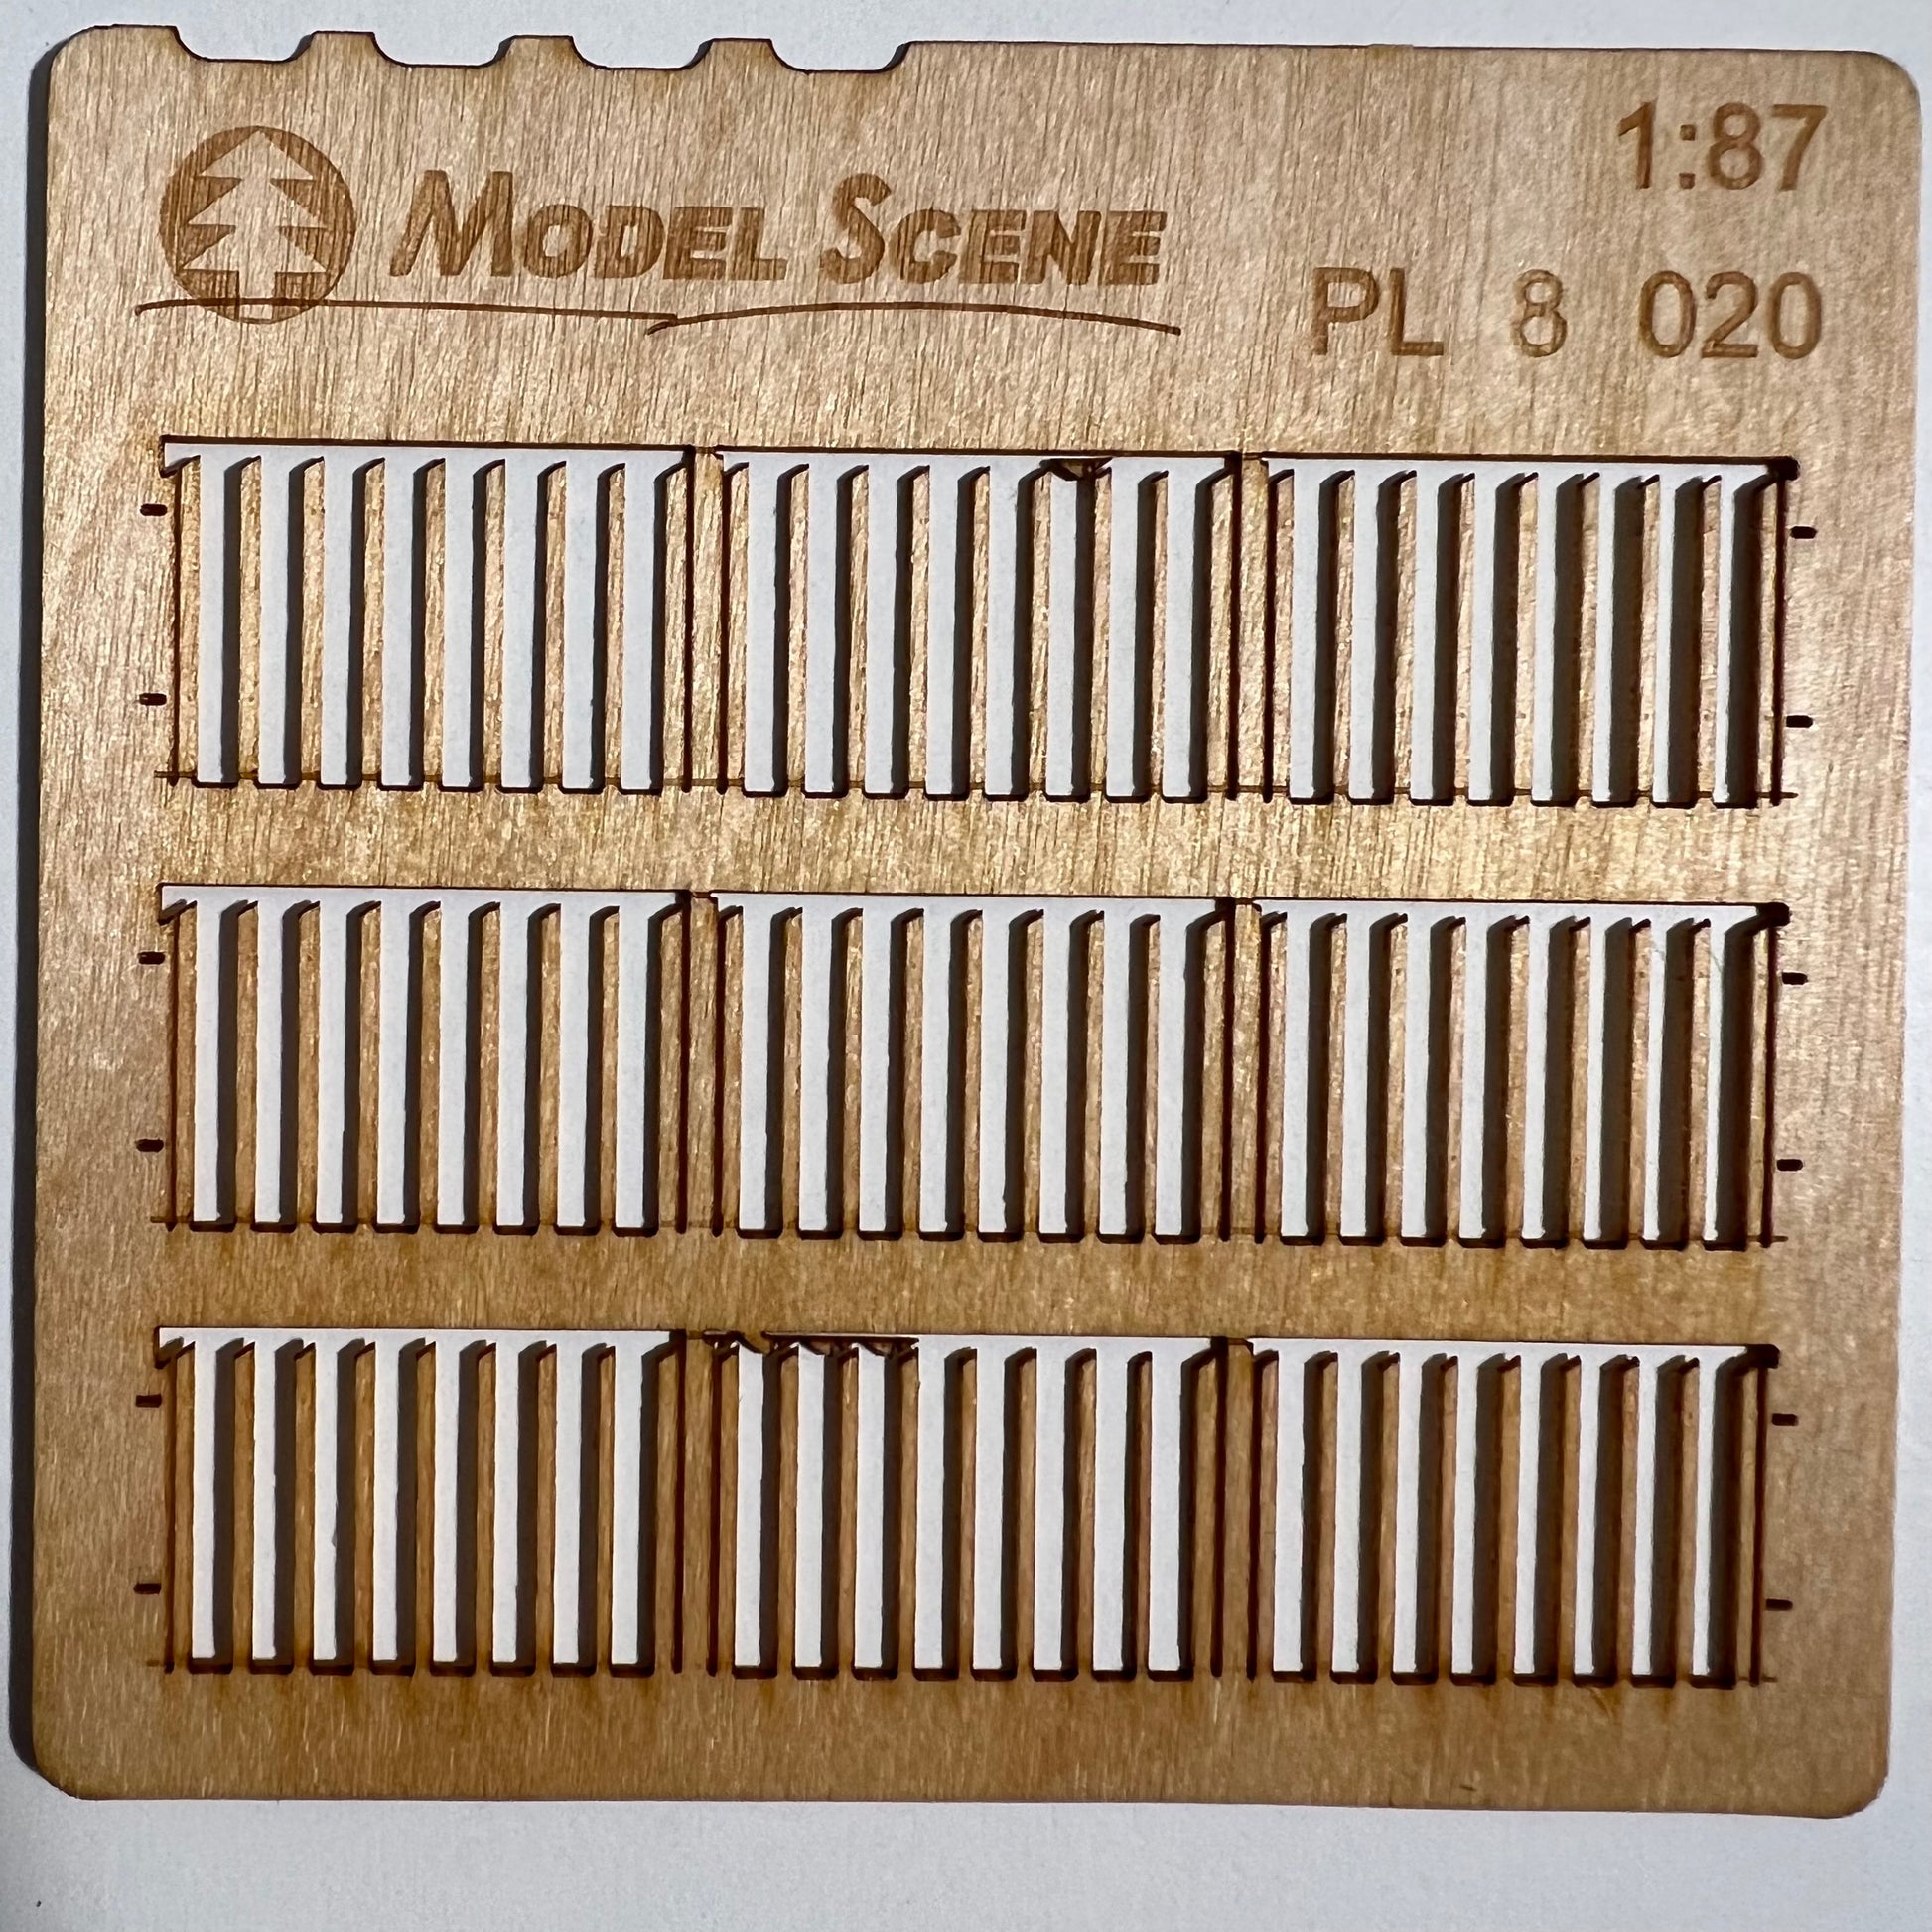 Bretterzaun - schmale Bretter, schiefer Rand , 1:87 - Langmesser-Modellwelt